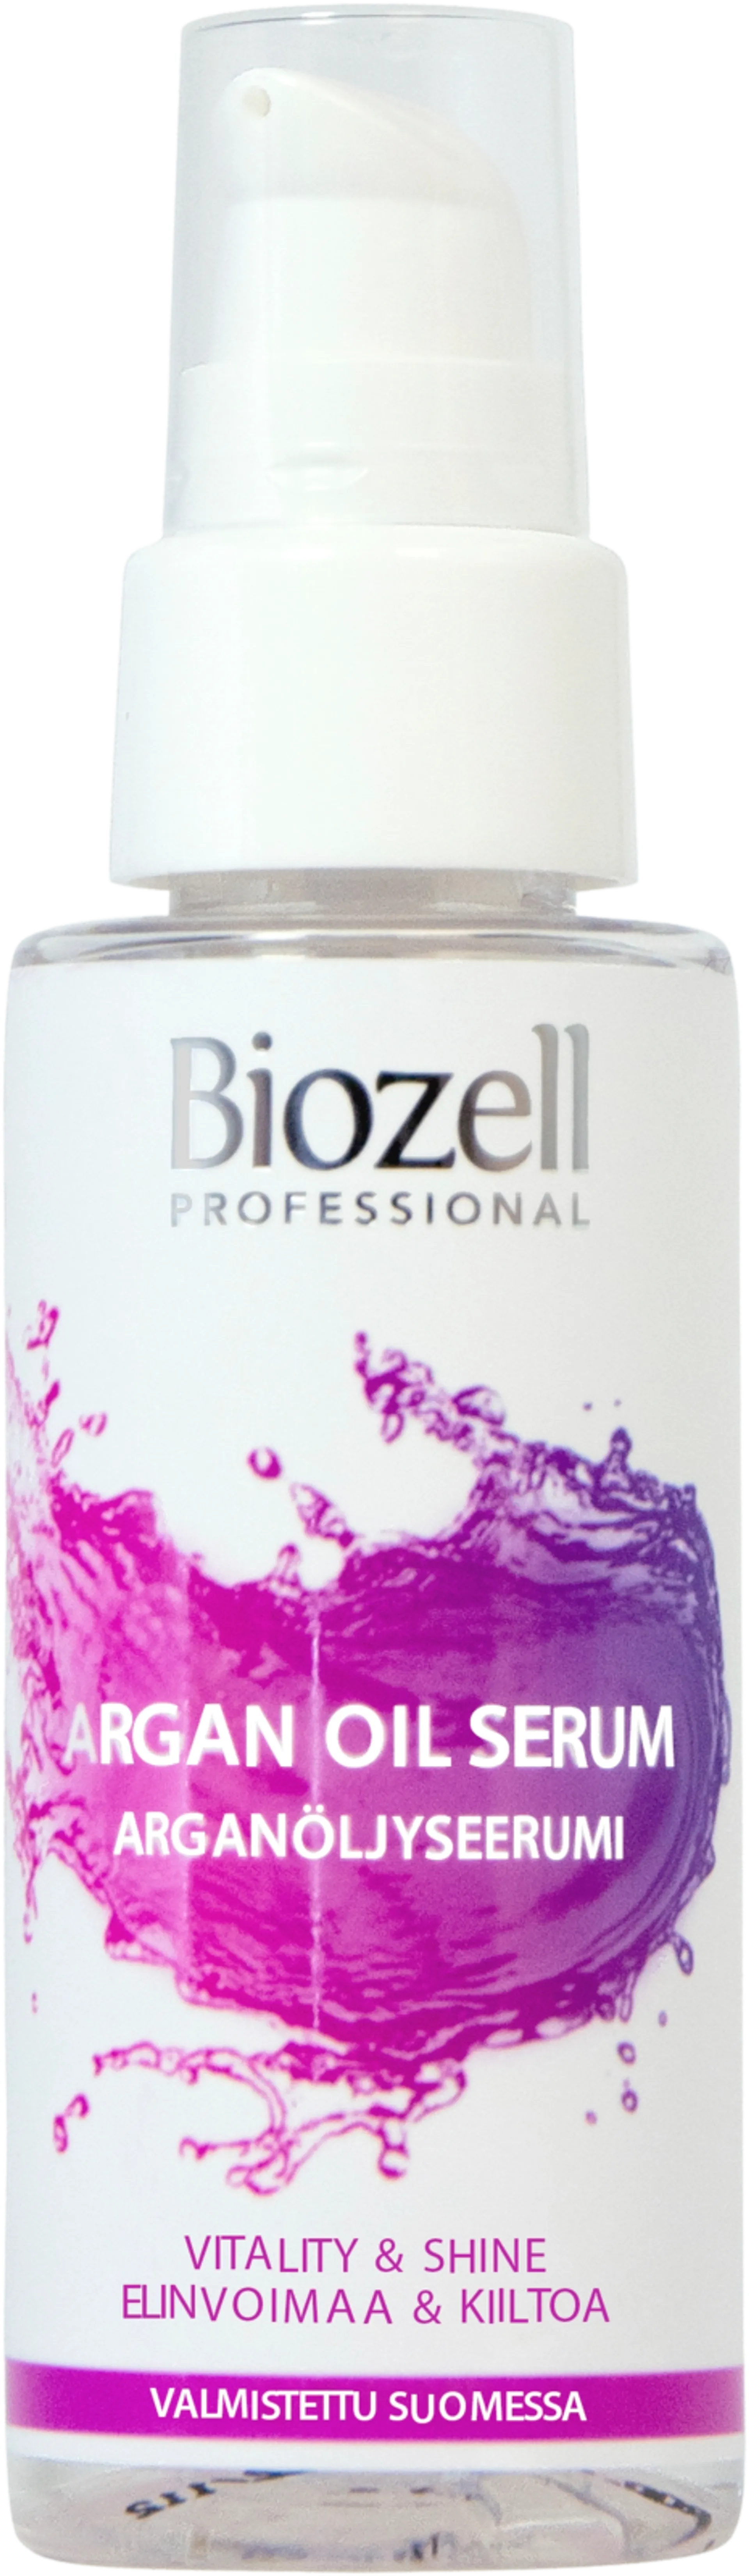 Biozell Professional Arganöljyseerumi 50ml